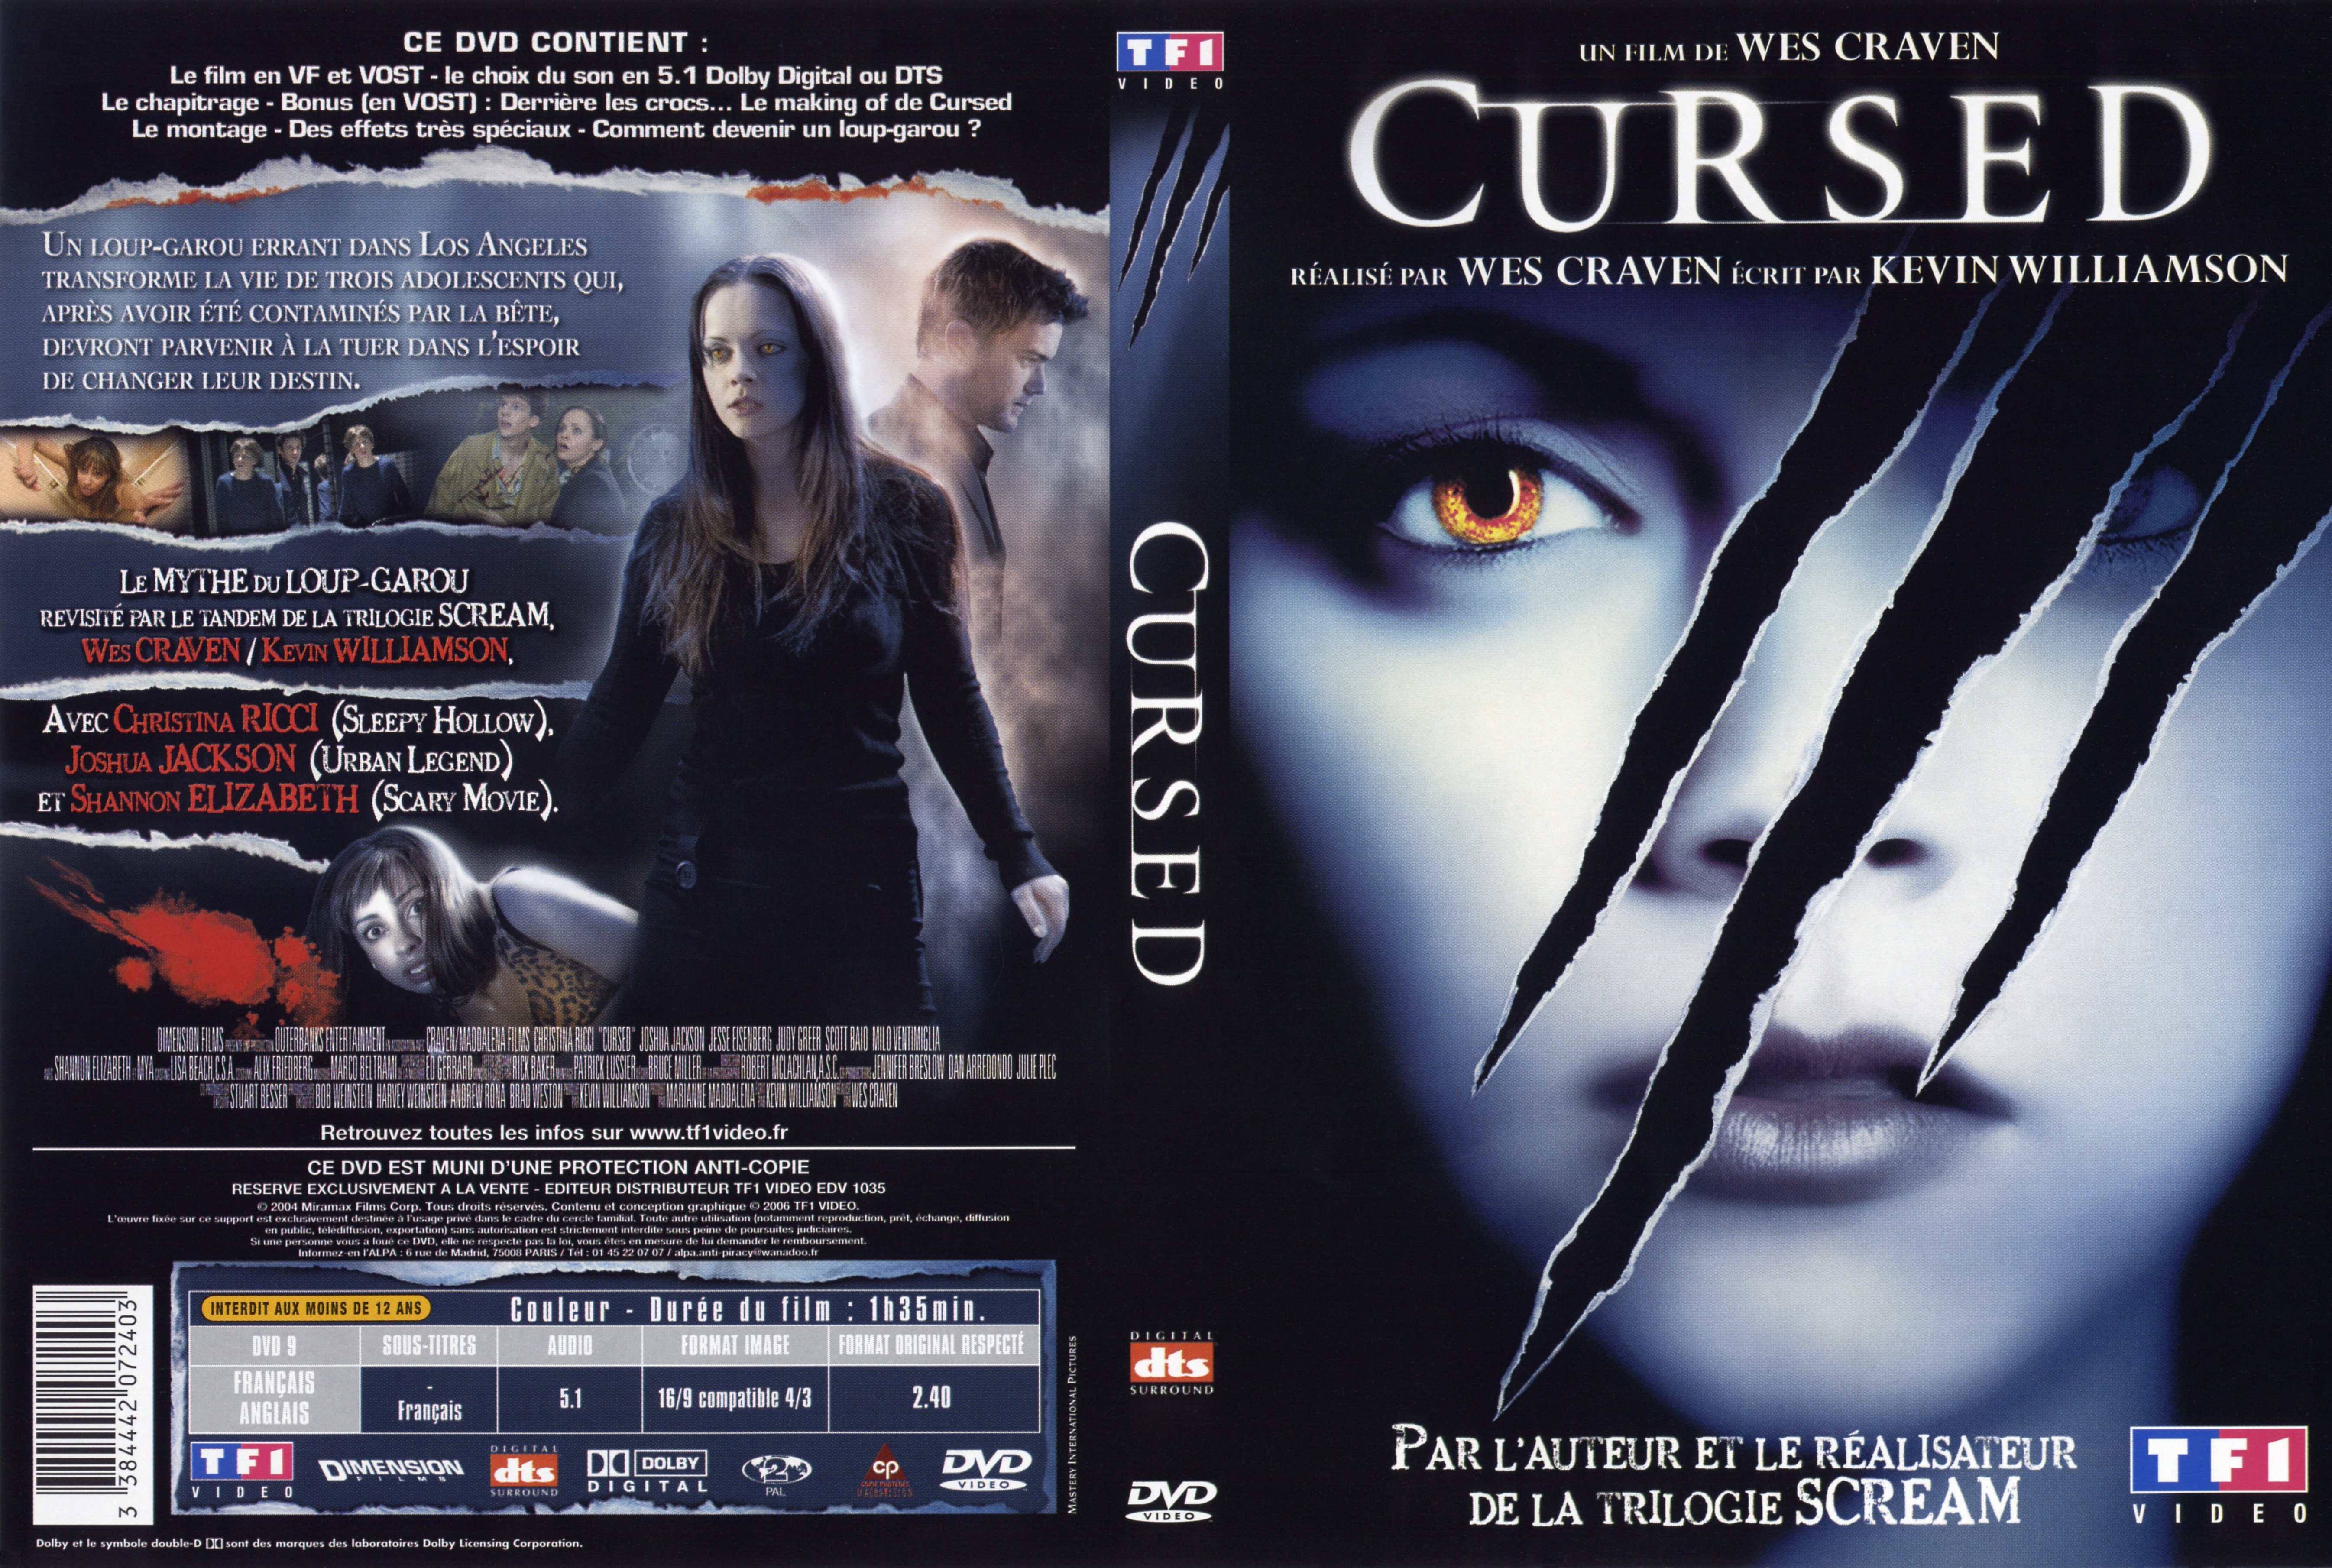 Jaquette DVD Cursed v2